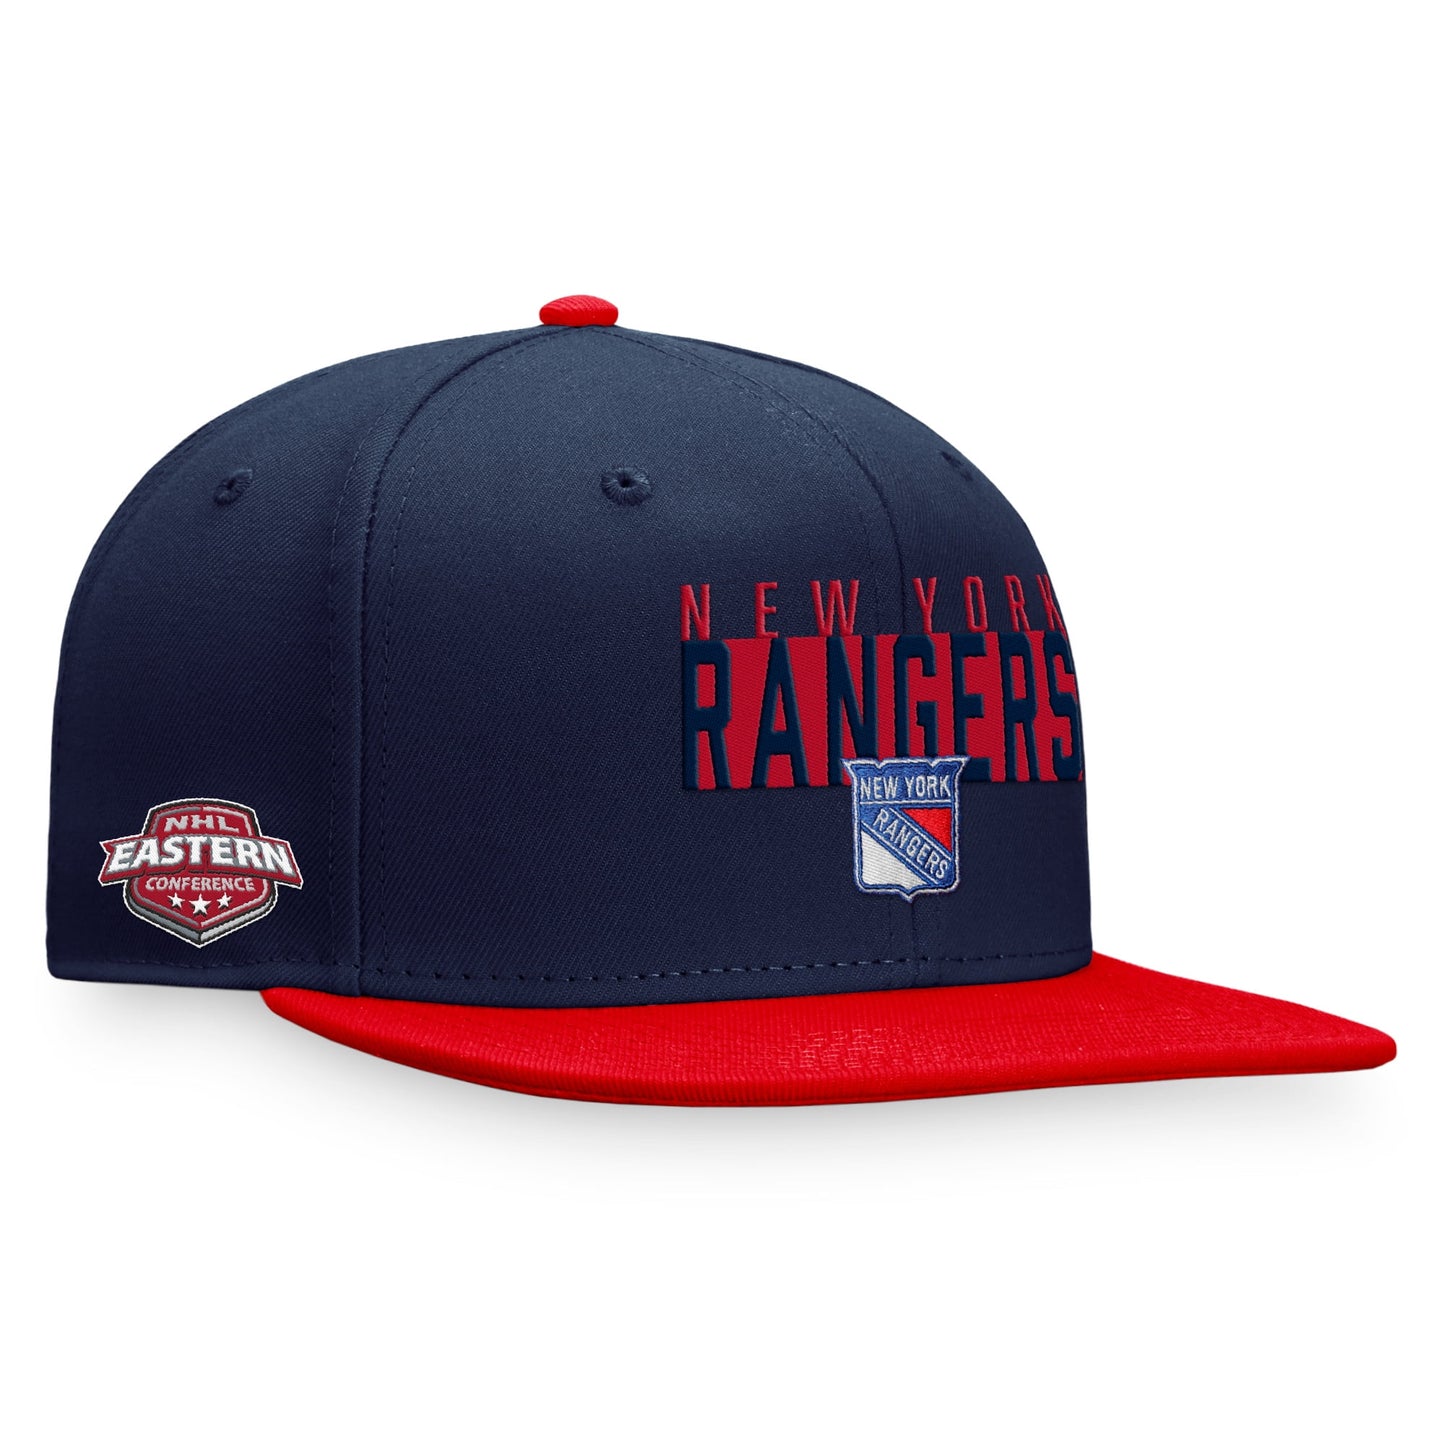 Men's Fanatics Branded Navy/Red New York Rangers Fundamental Colorblocked Snapback Hat - OSFA